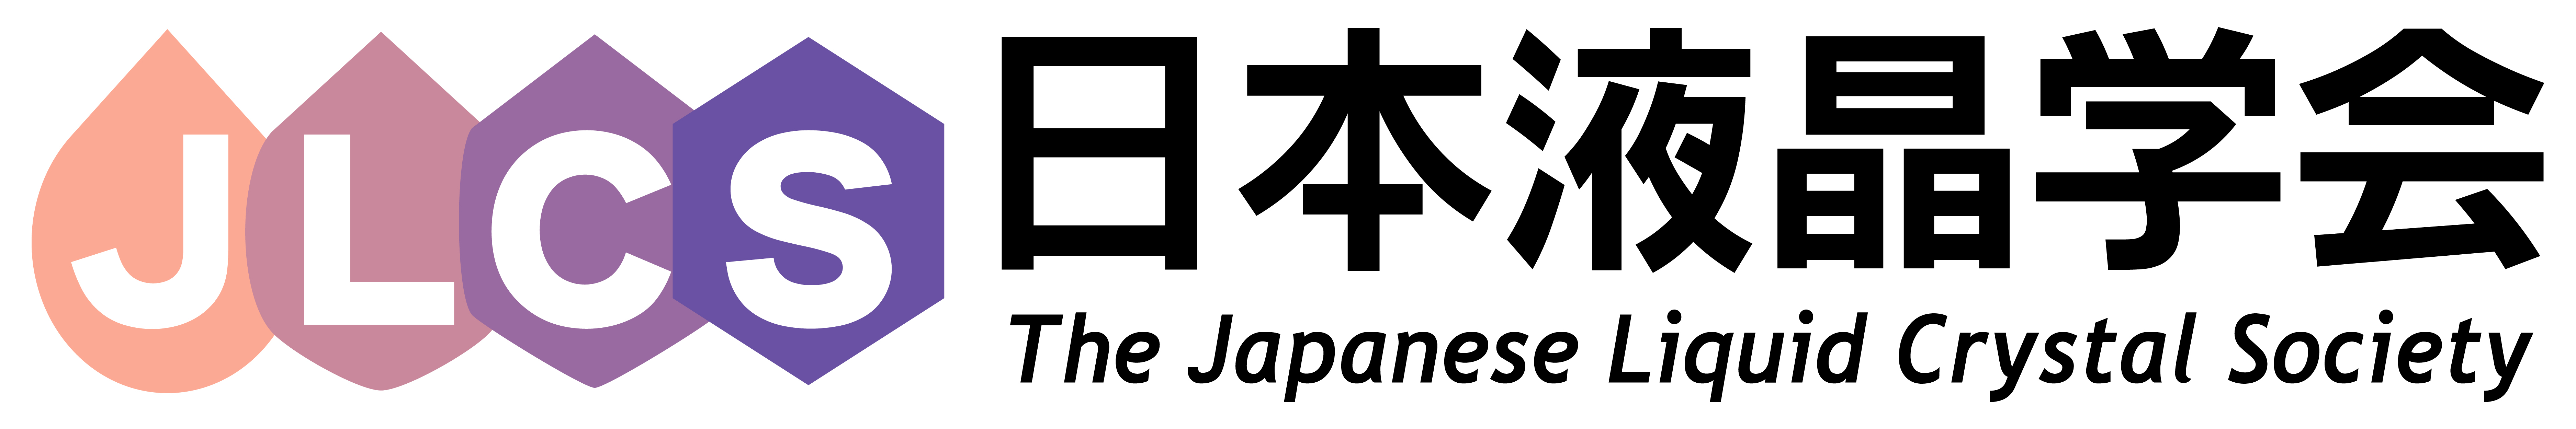 JLCS Logo with 日本液晶学会